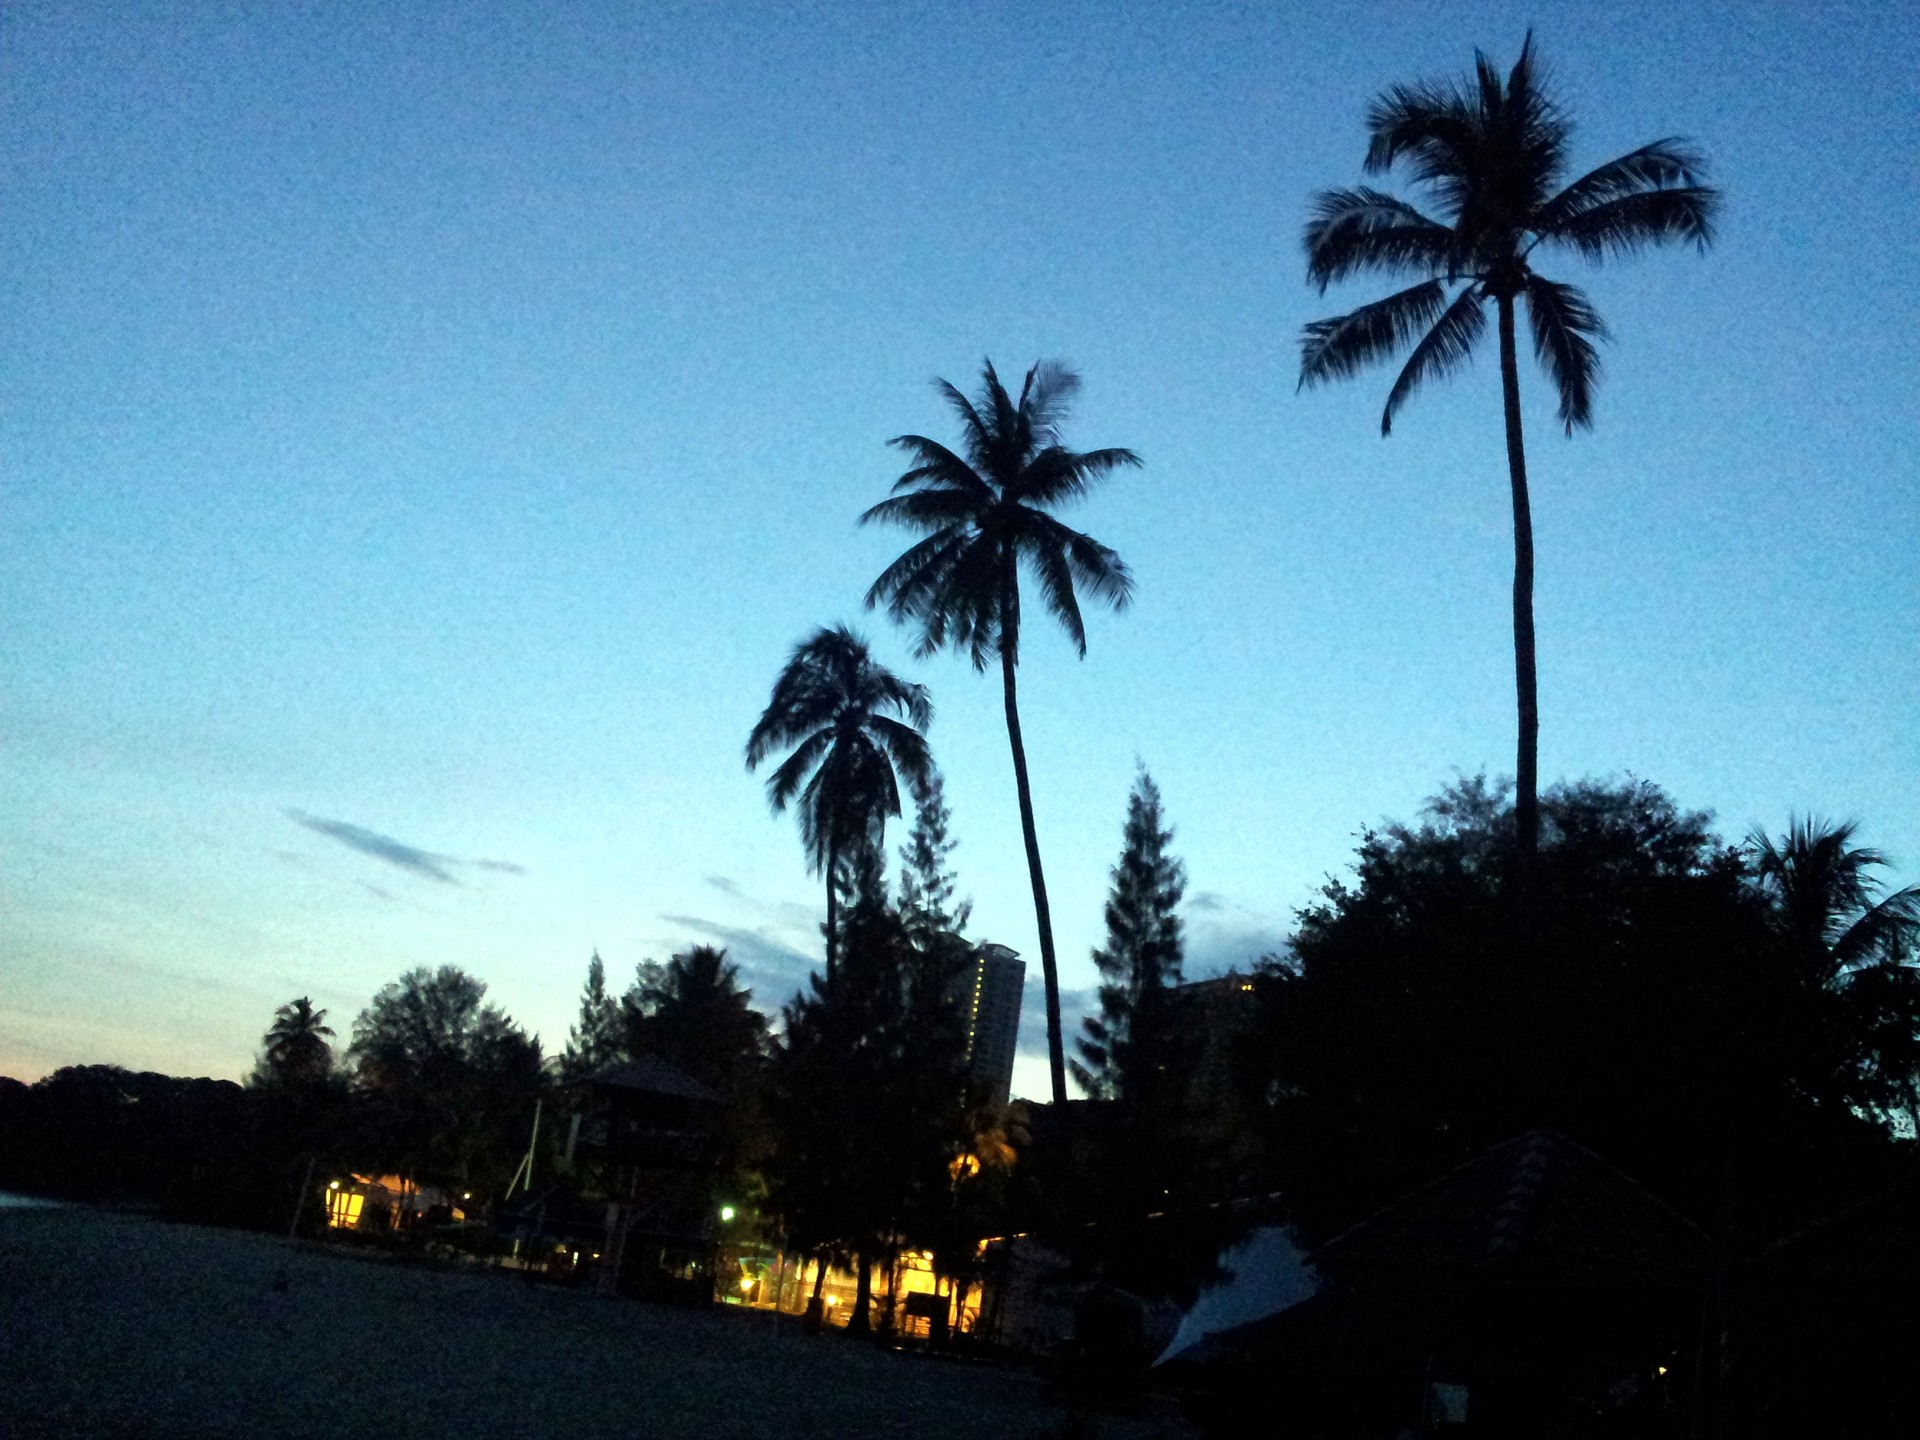 dawn picture beach resort coconut tree shadow dawn picture in beach resort free photo